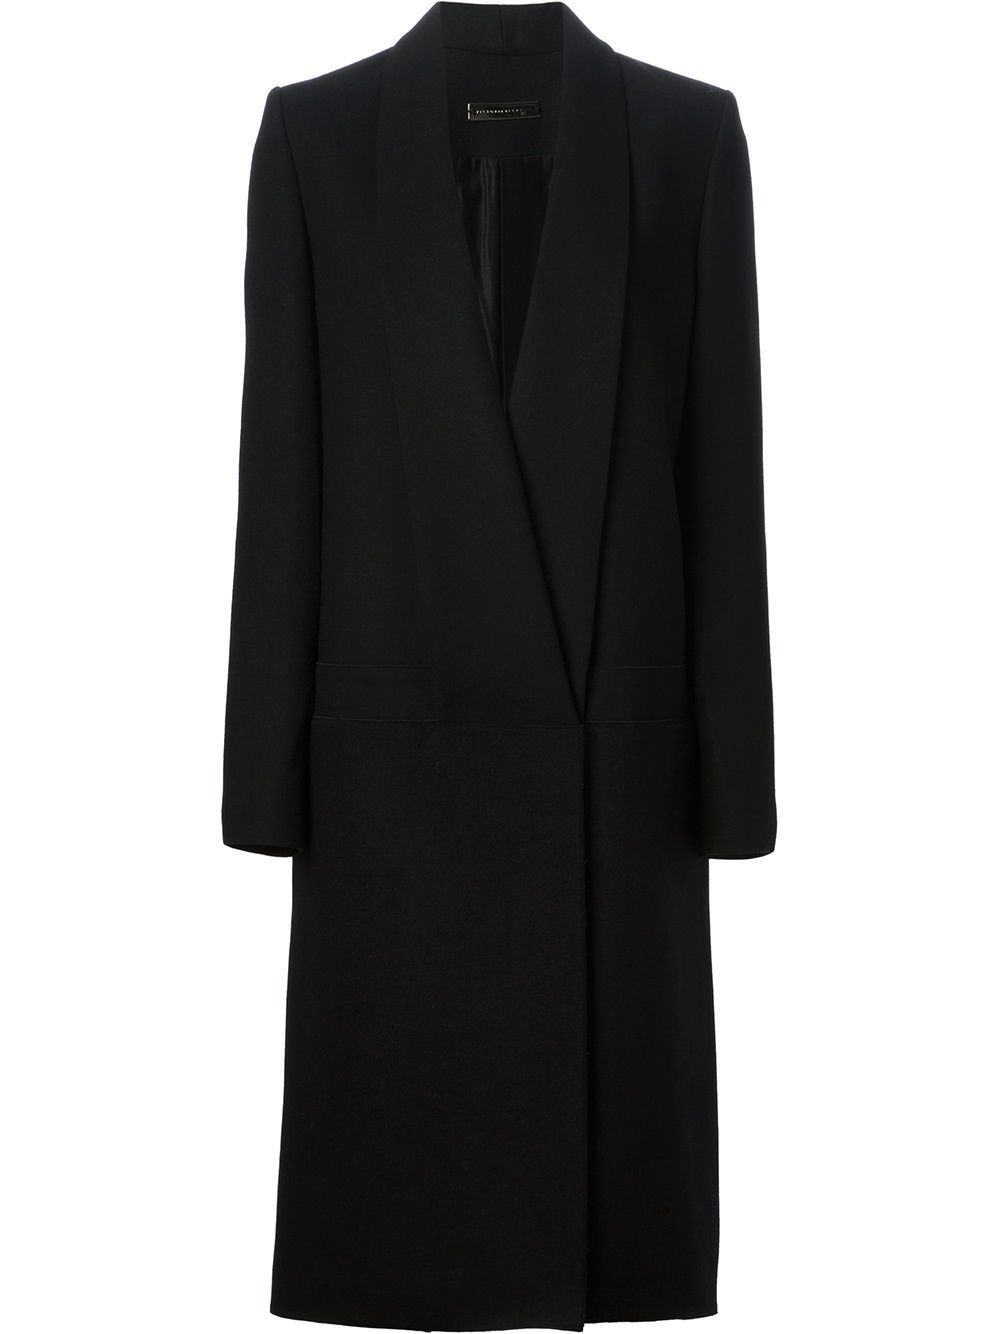 Lyst - Victoria Beckham Structured Coat in Black